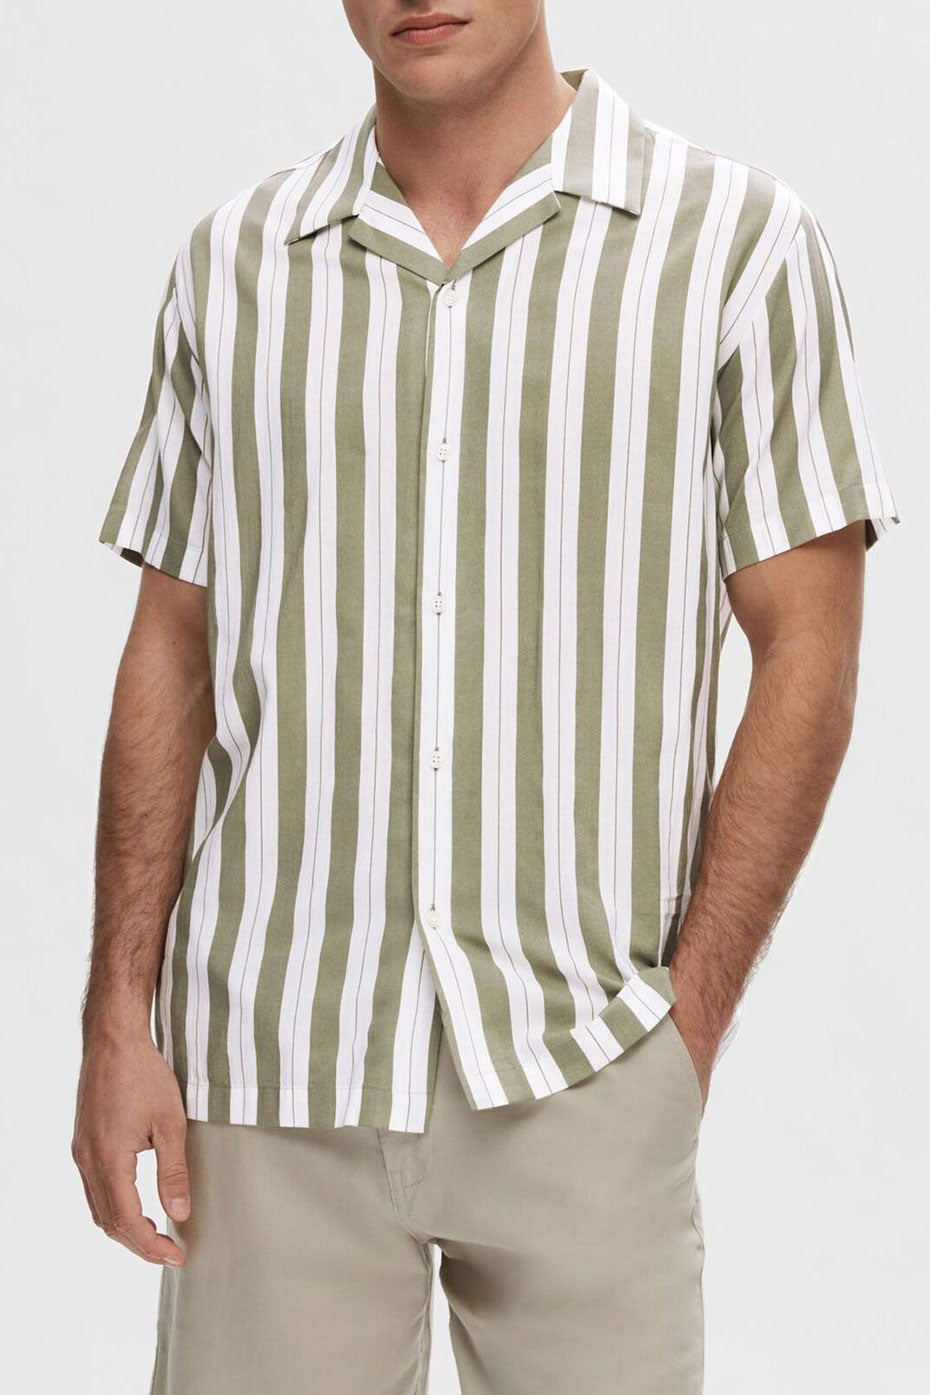 Selected Homme Vetiver Stripes Reg Air Shirt